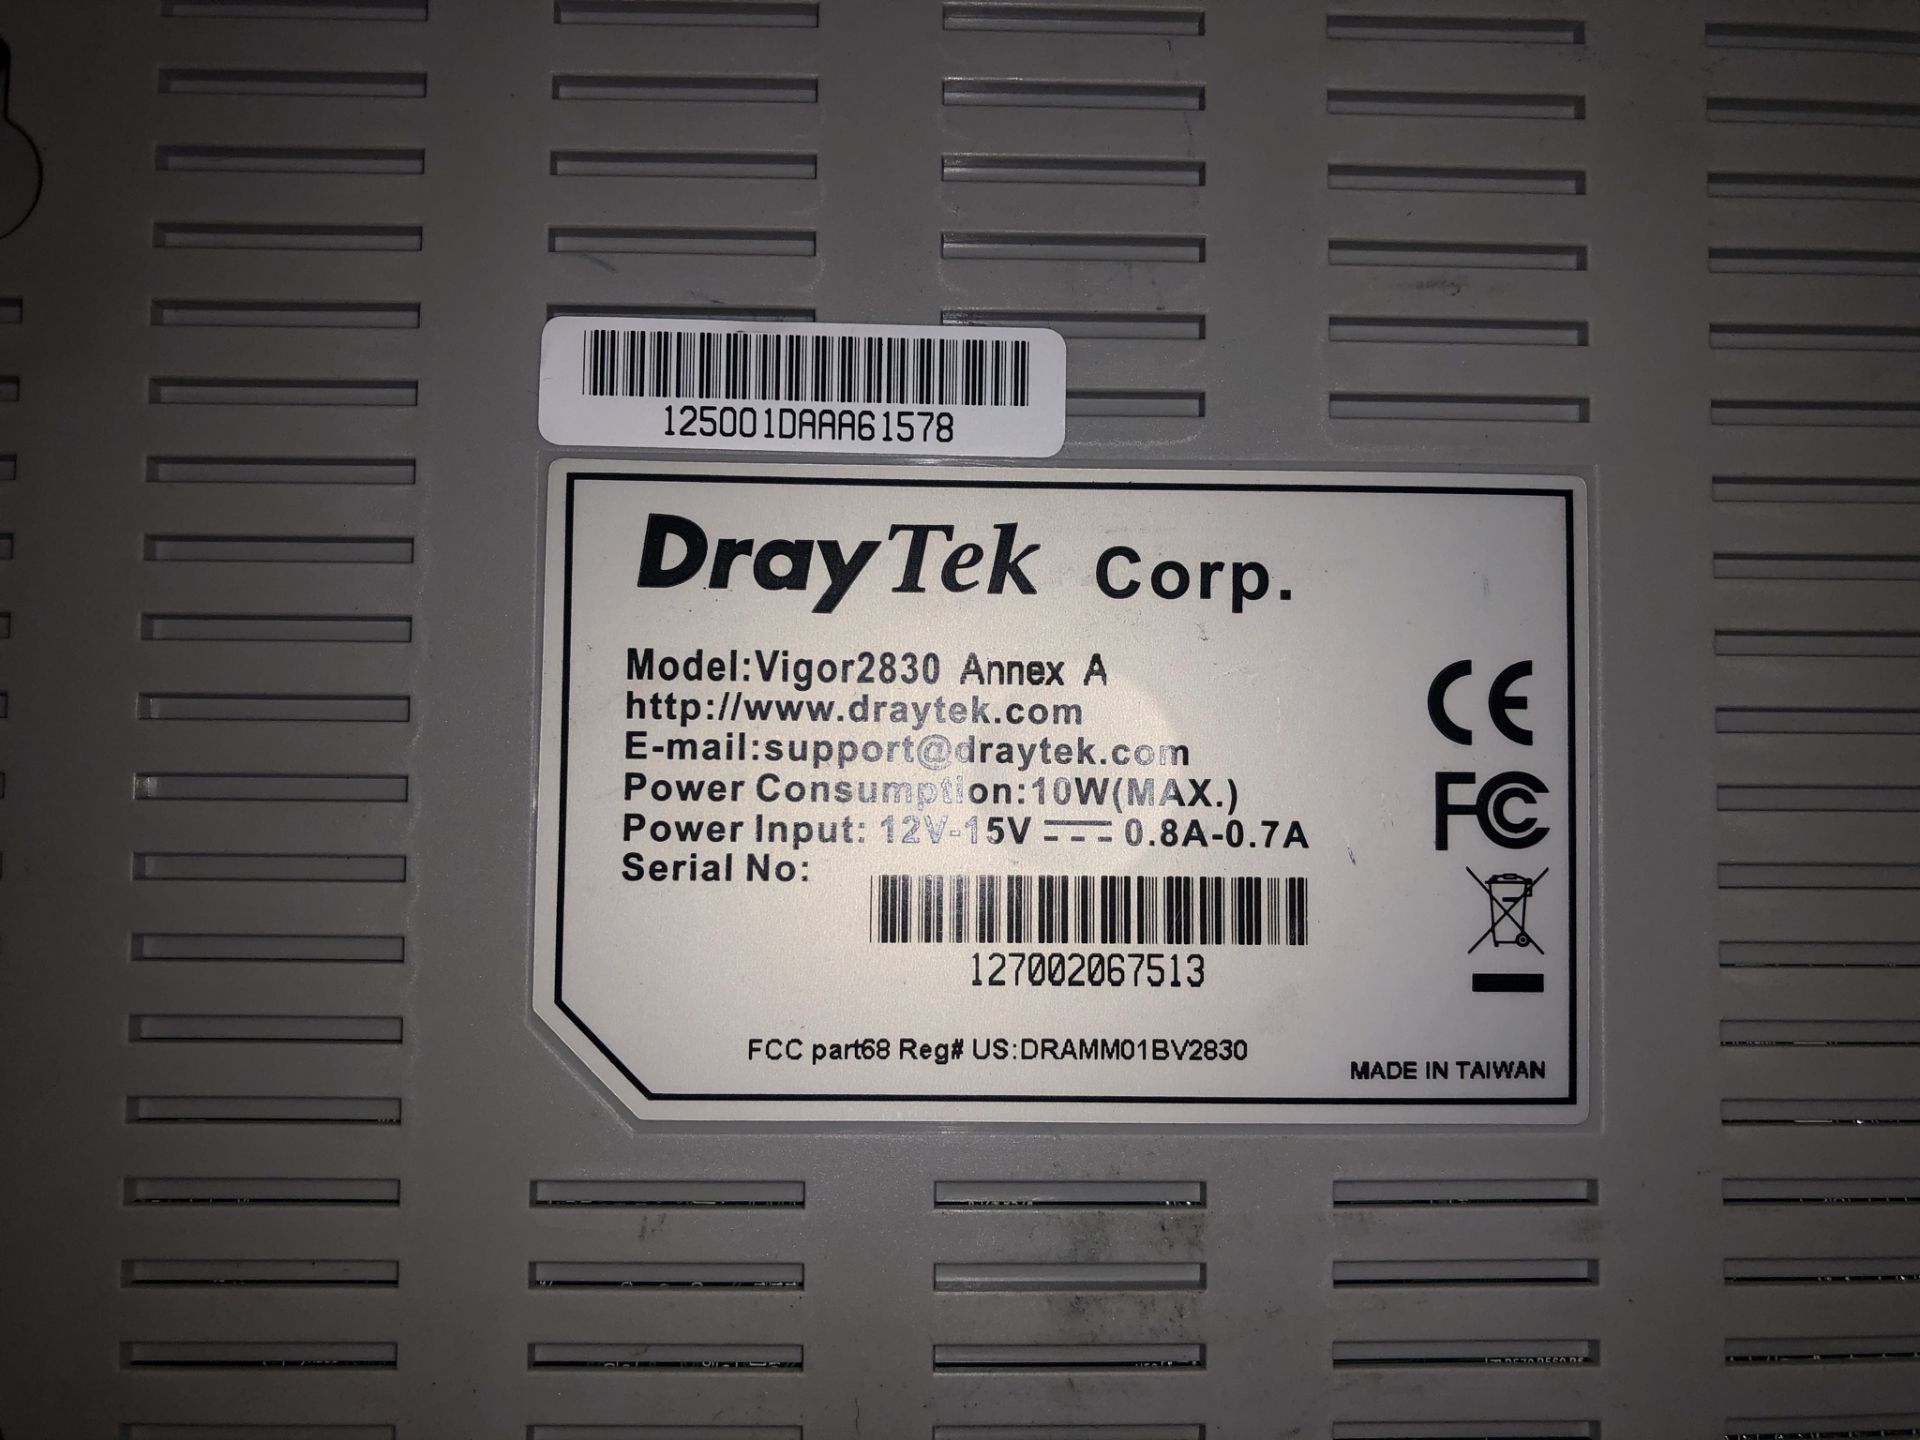 2 x Draytek Vigor2830 Wireless Firewall Routers - Image 4 of 4